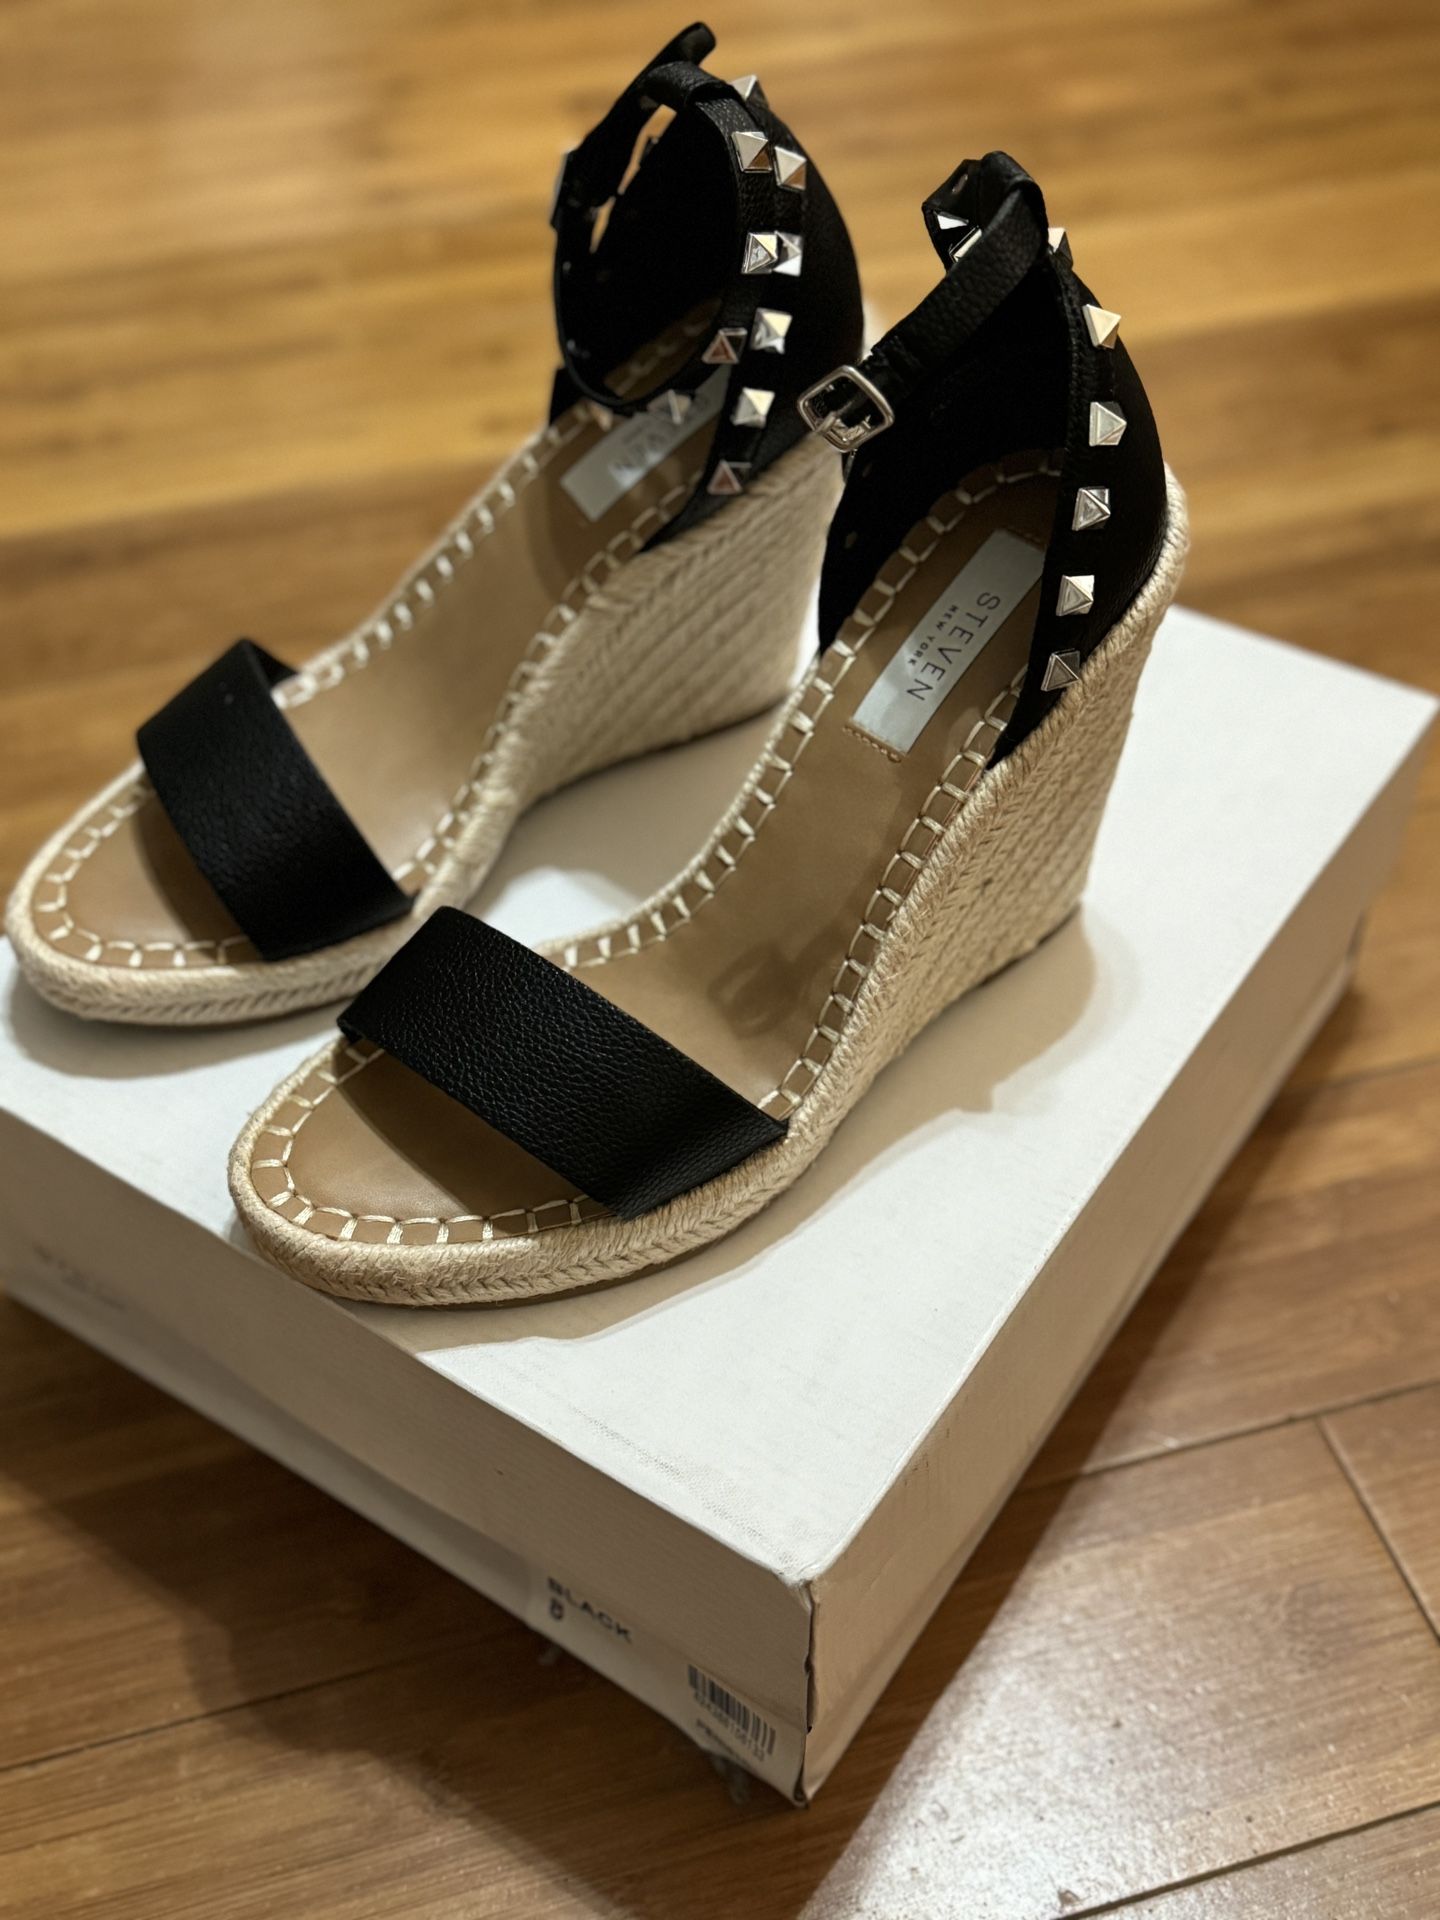 Steve Madden Women’s Wedge Sandals Size 8